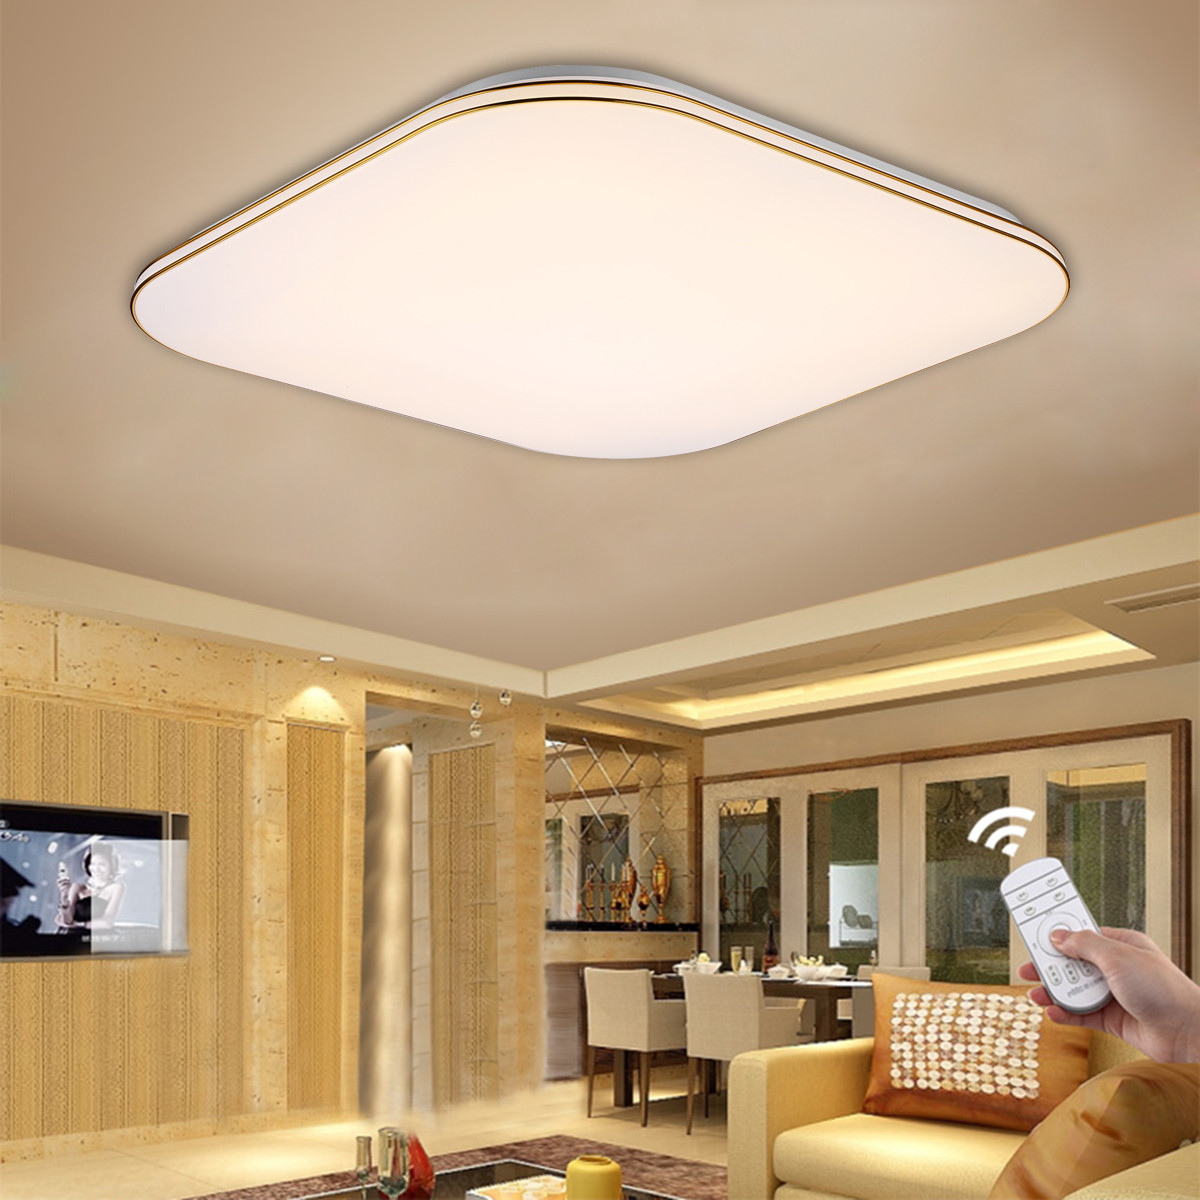 Led Kitchen Ceiling Lights
 Details about Bright 36W LED Ceiling Down Light Flush